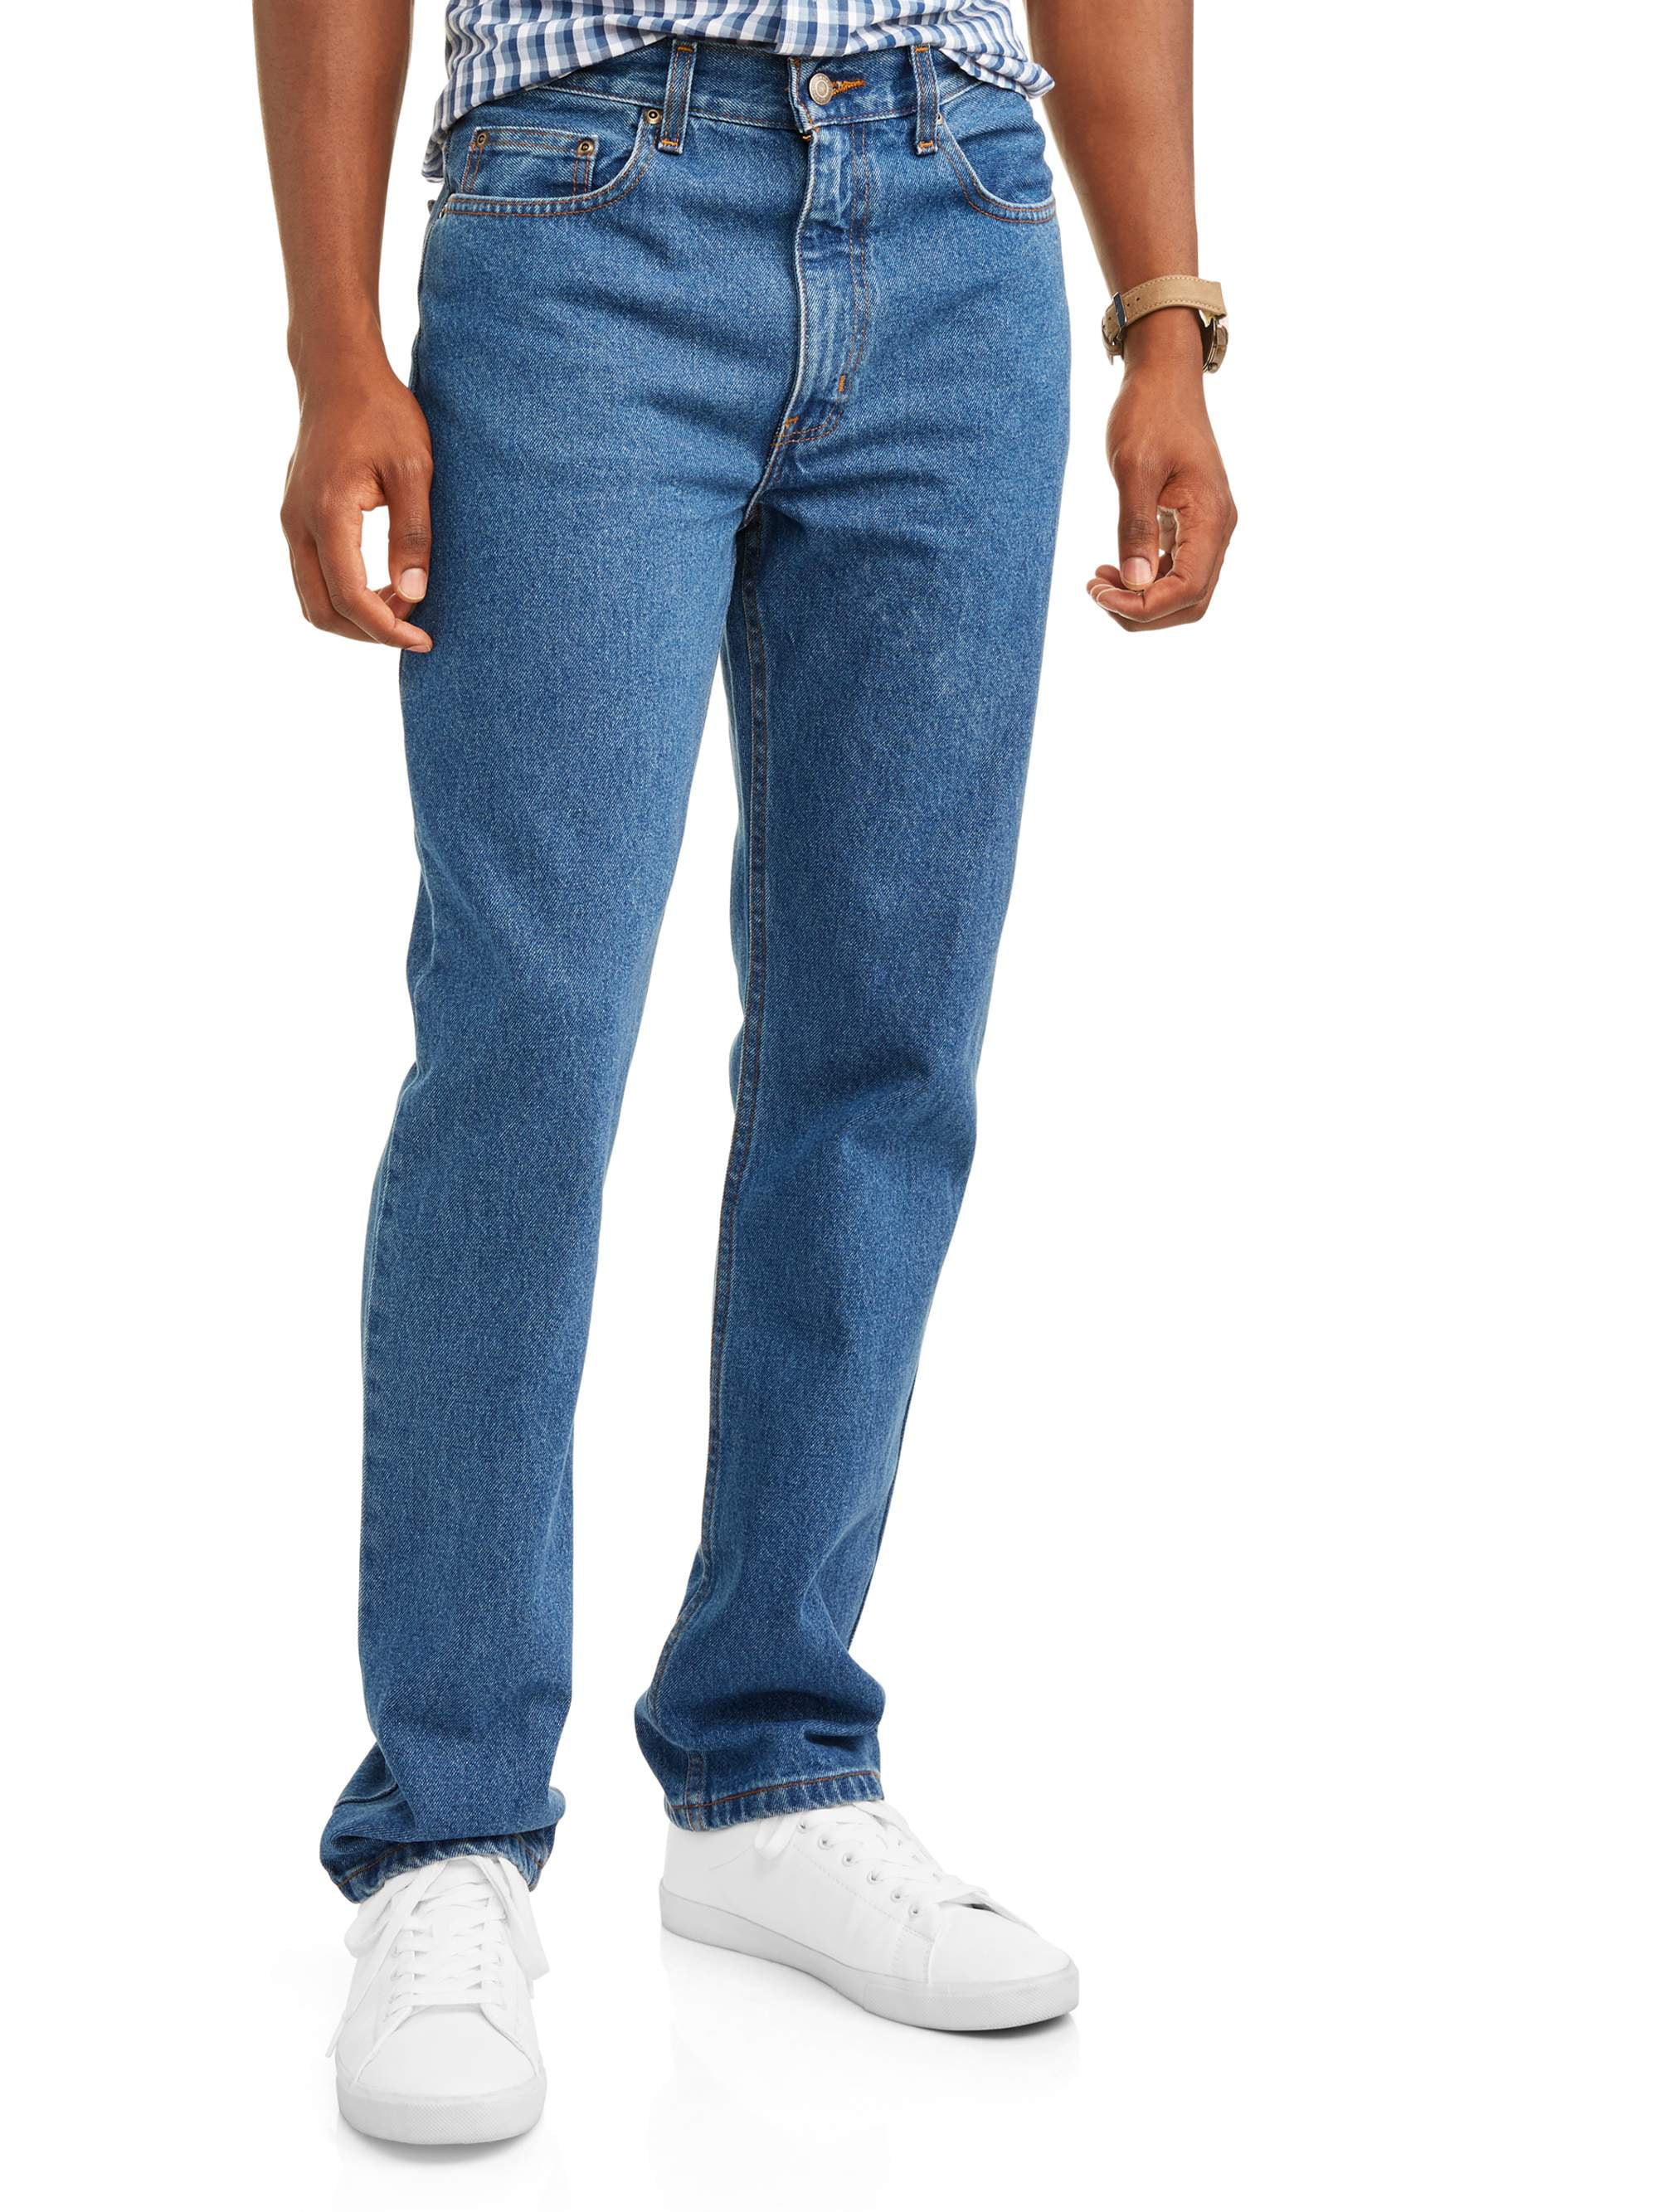 Levi's 501s in Stonewash: Men's Regular Fit, Straight Leg Jeans